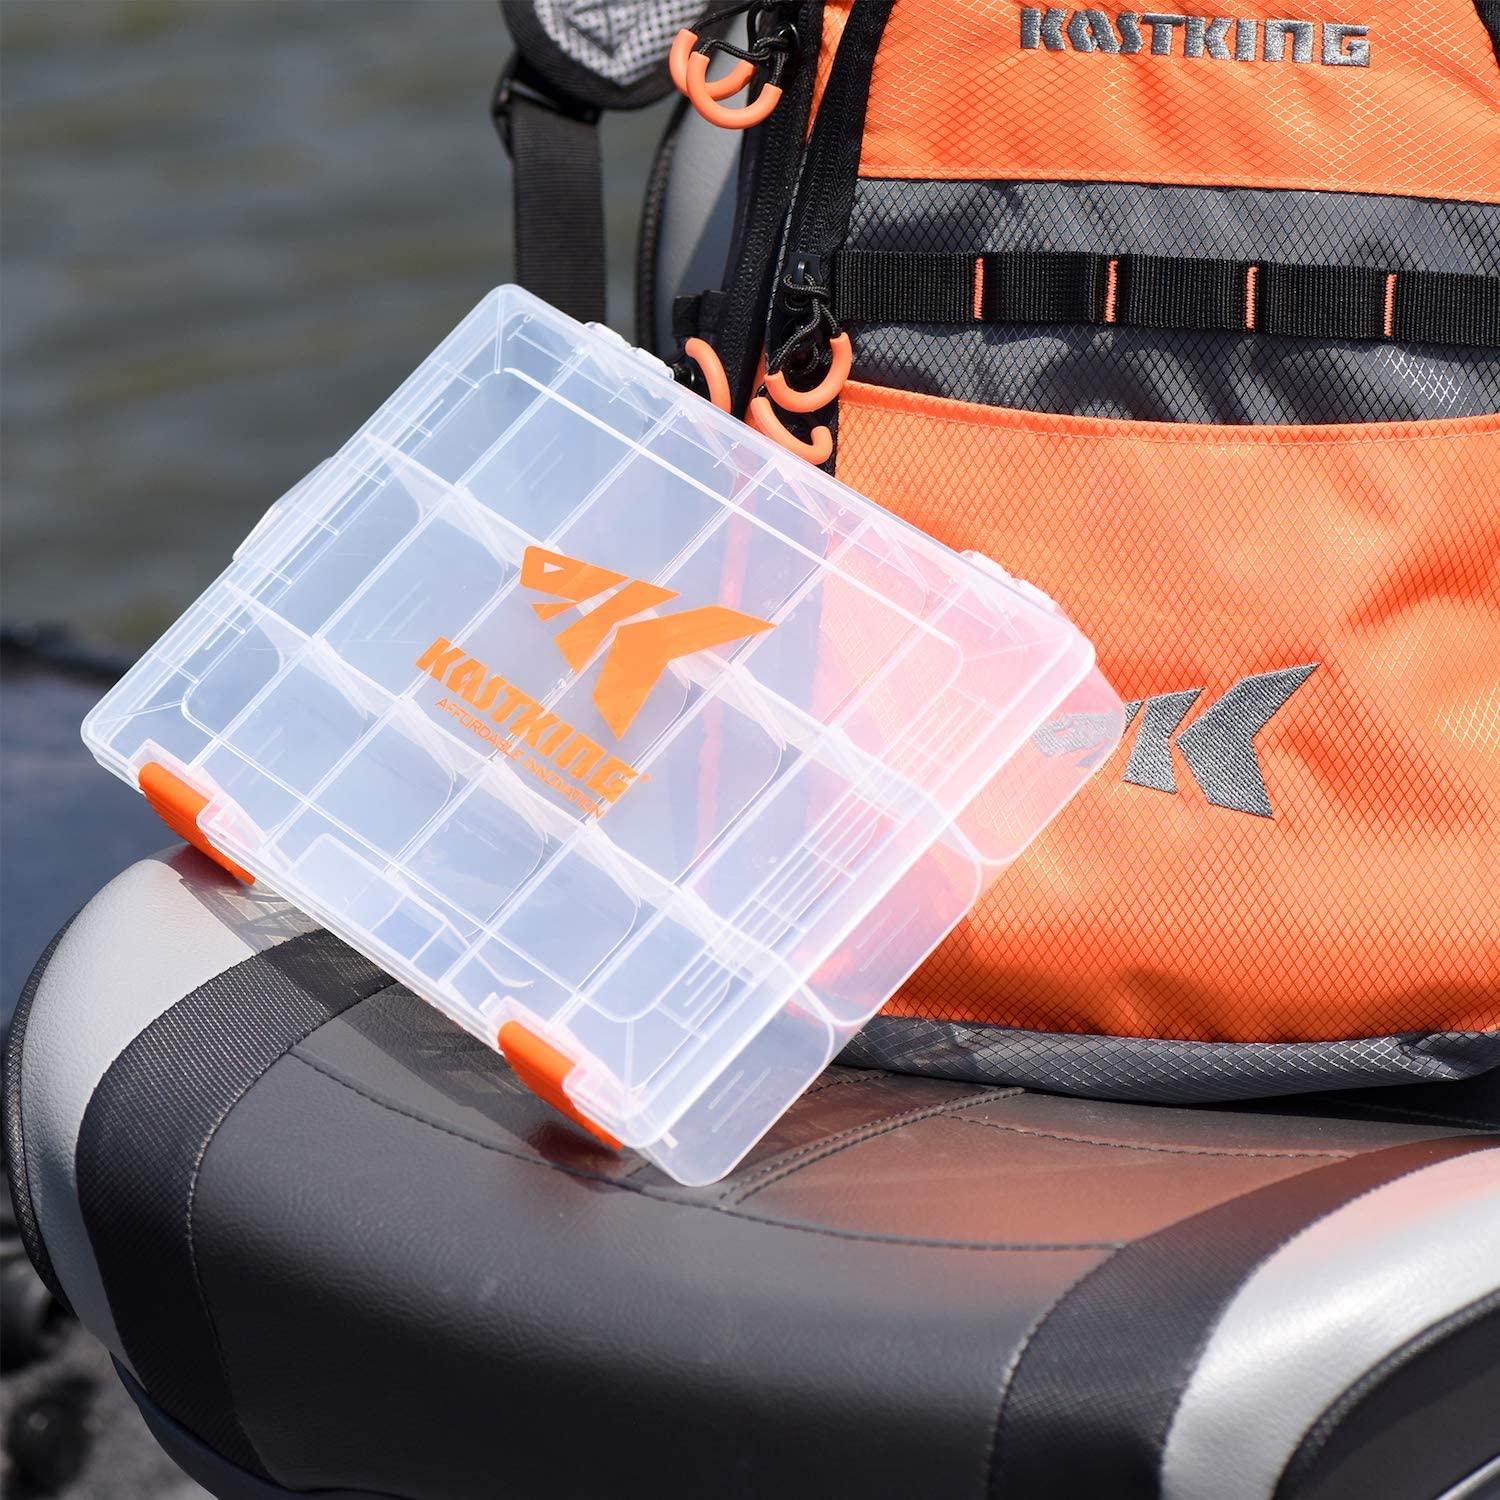 KastKing Bait Boss Fishing Tackle Bag, Soft Plastic Bait System